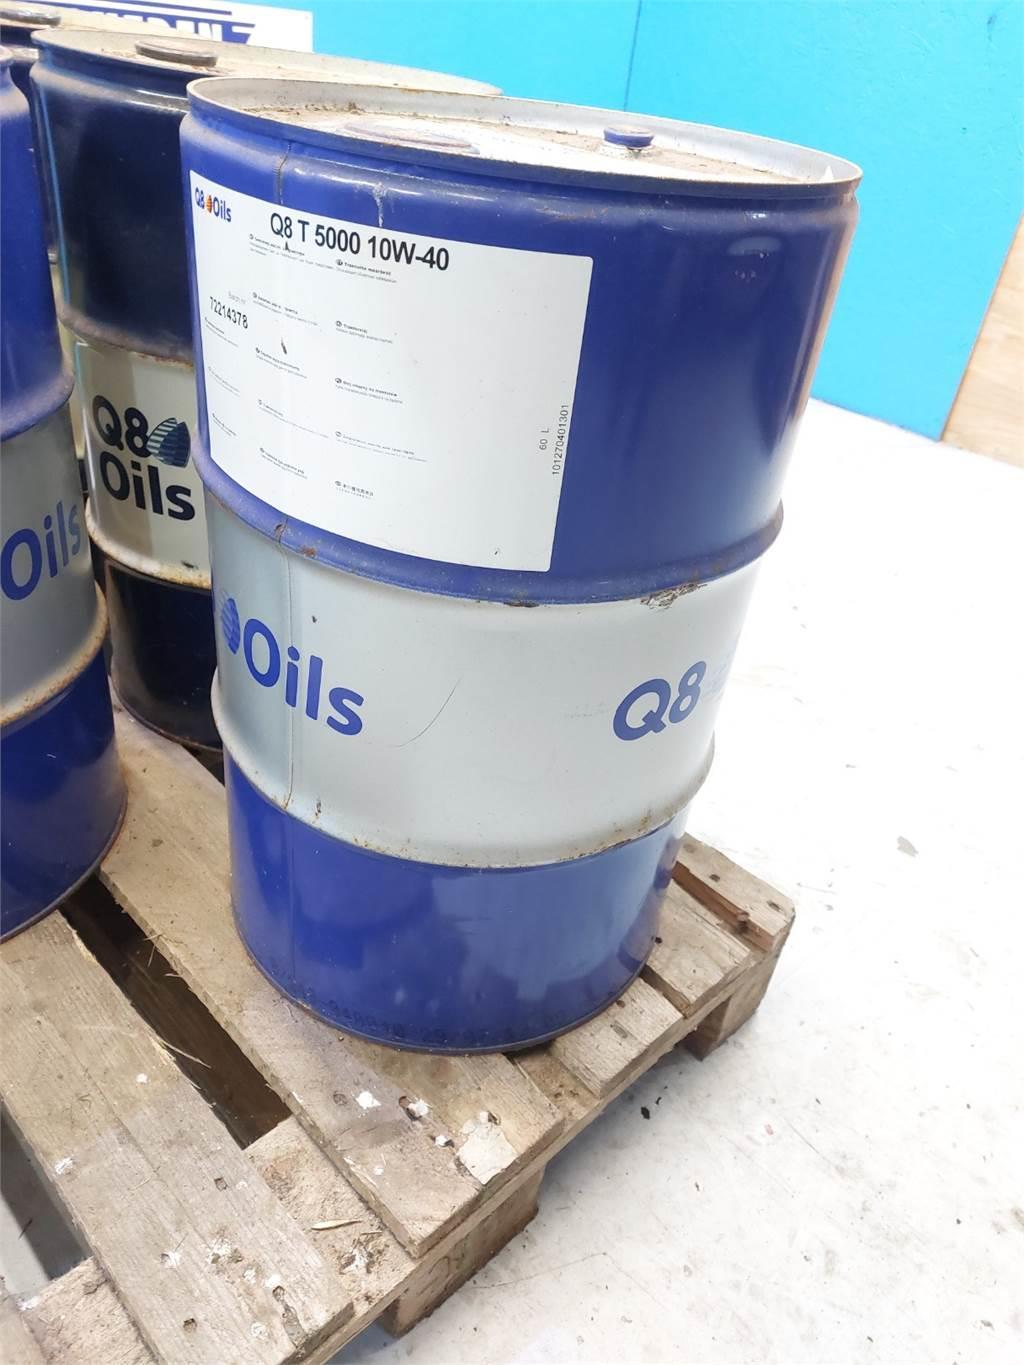  Oiletønde 60L Q8 10W-40 Drugo